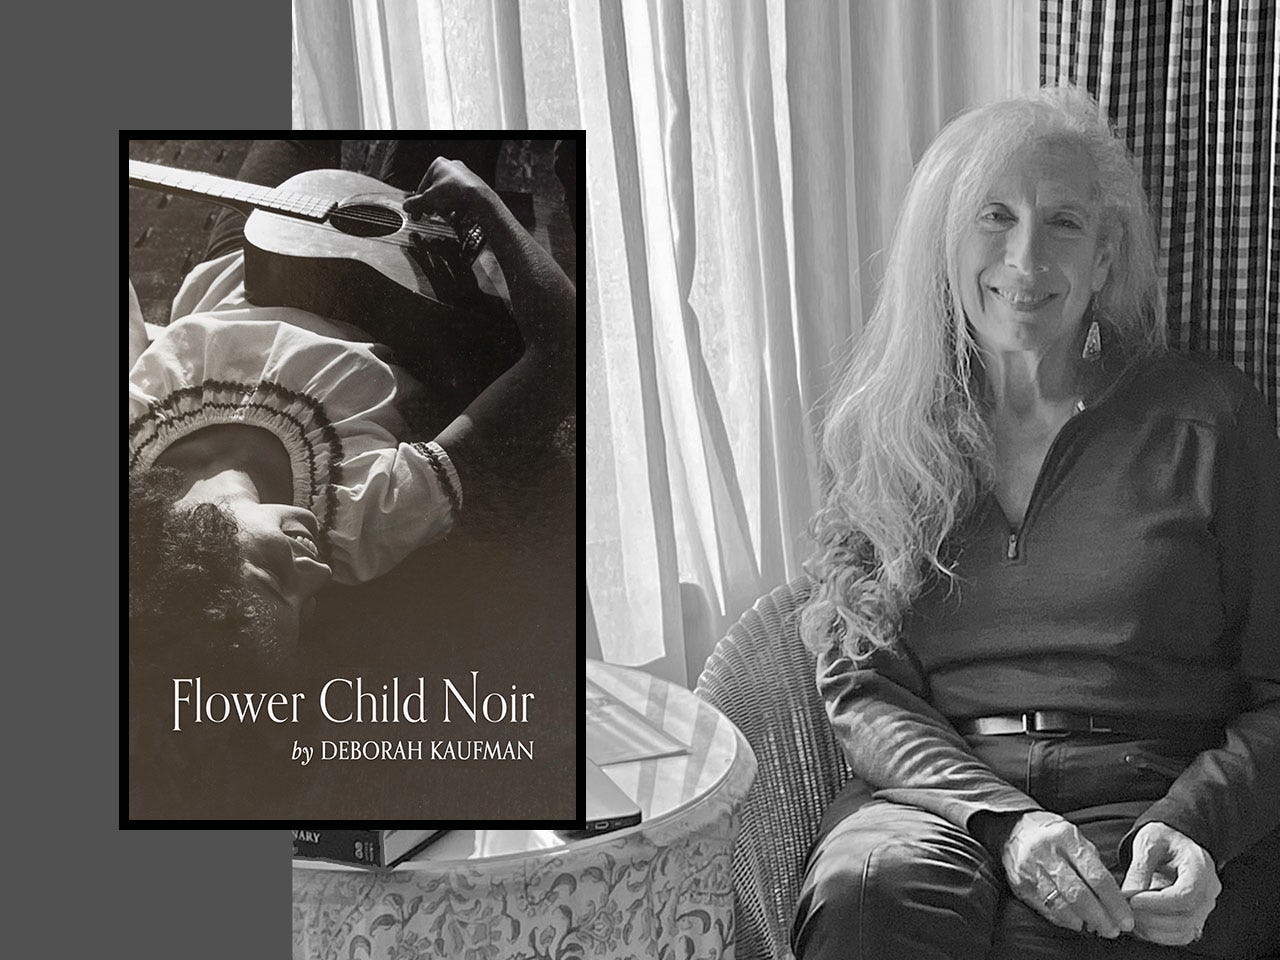 Deborah Kaufman is the author of the "Flower Child Noir."